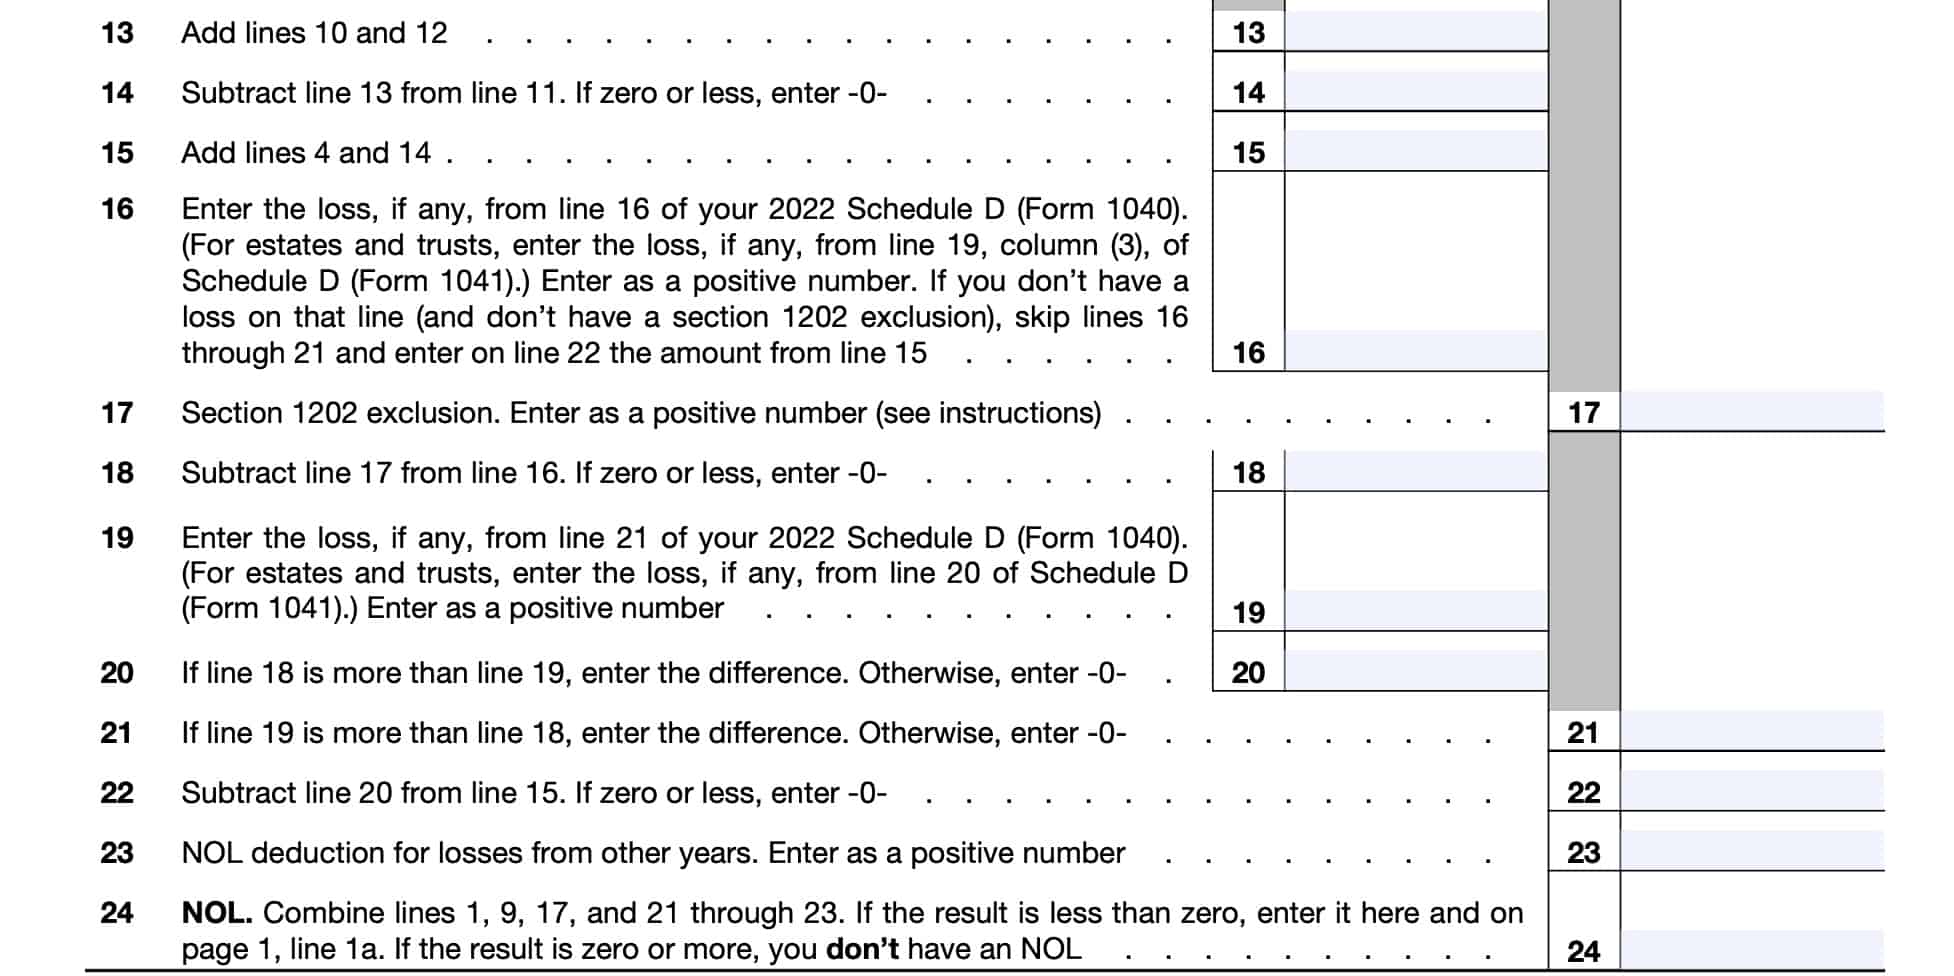 Schedule A, lines 13-24